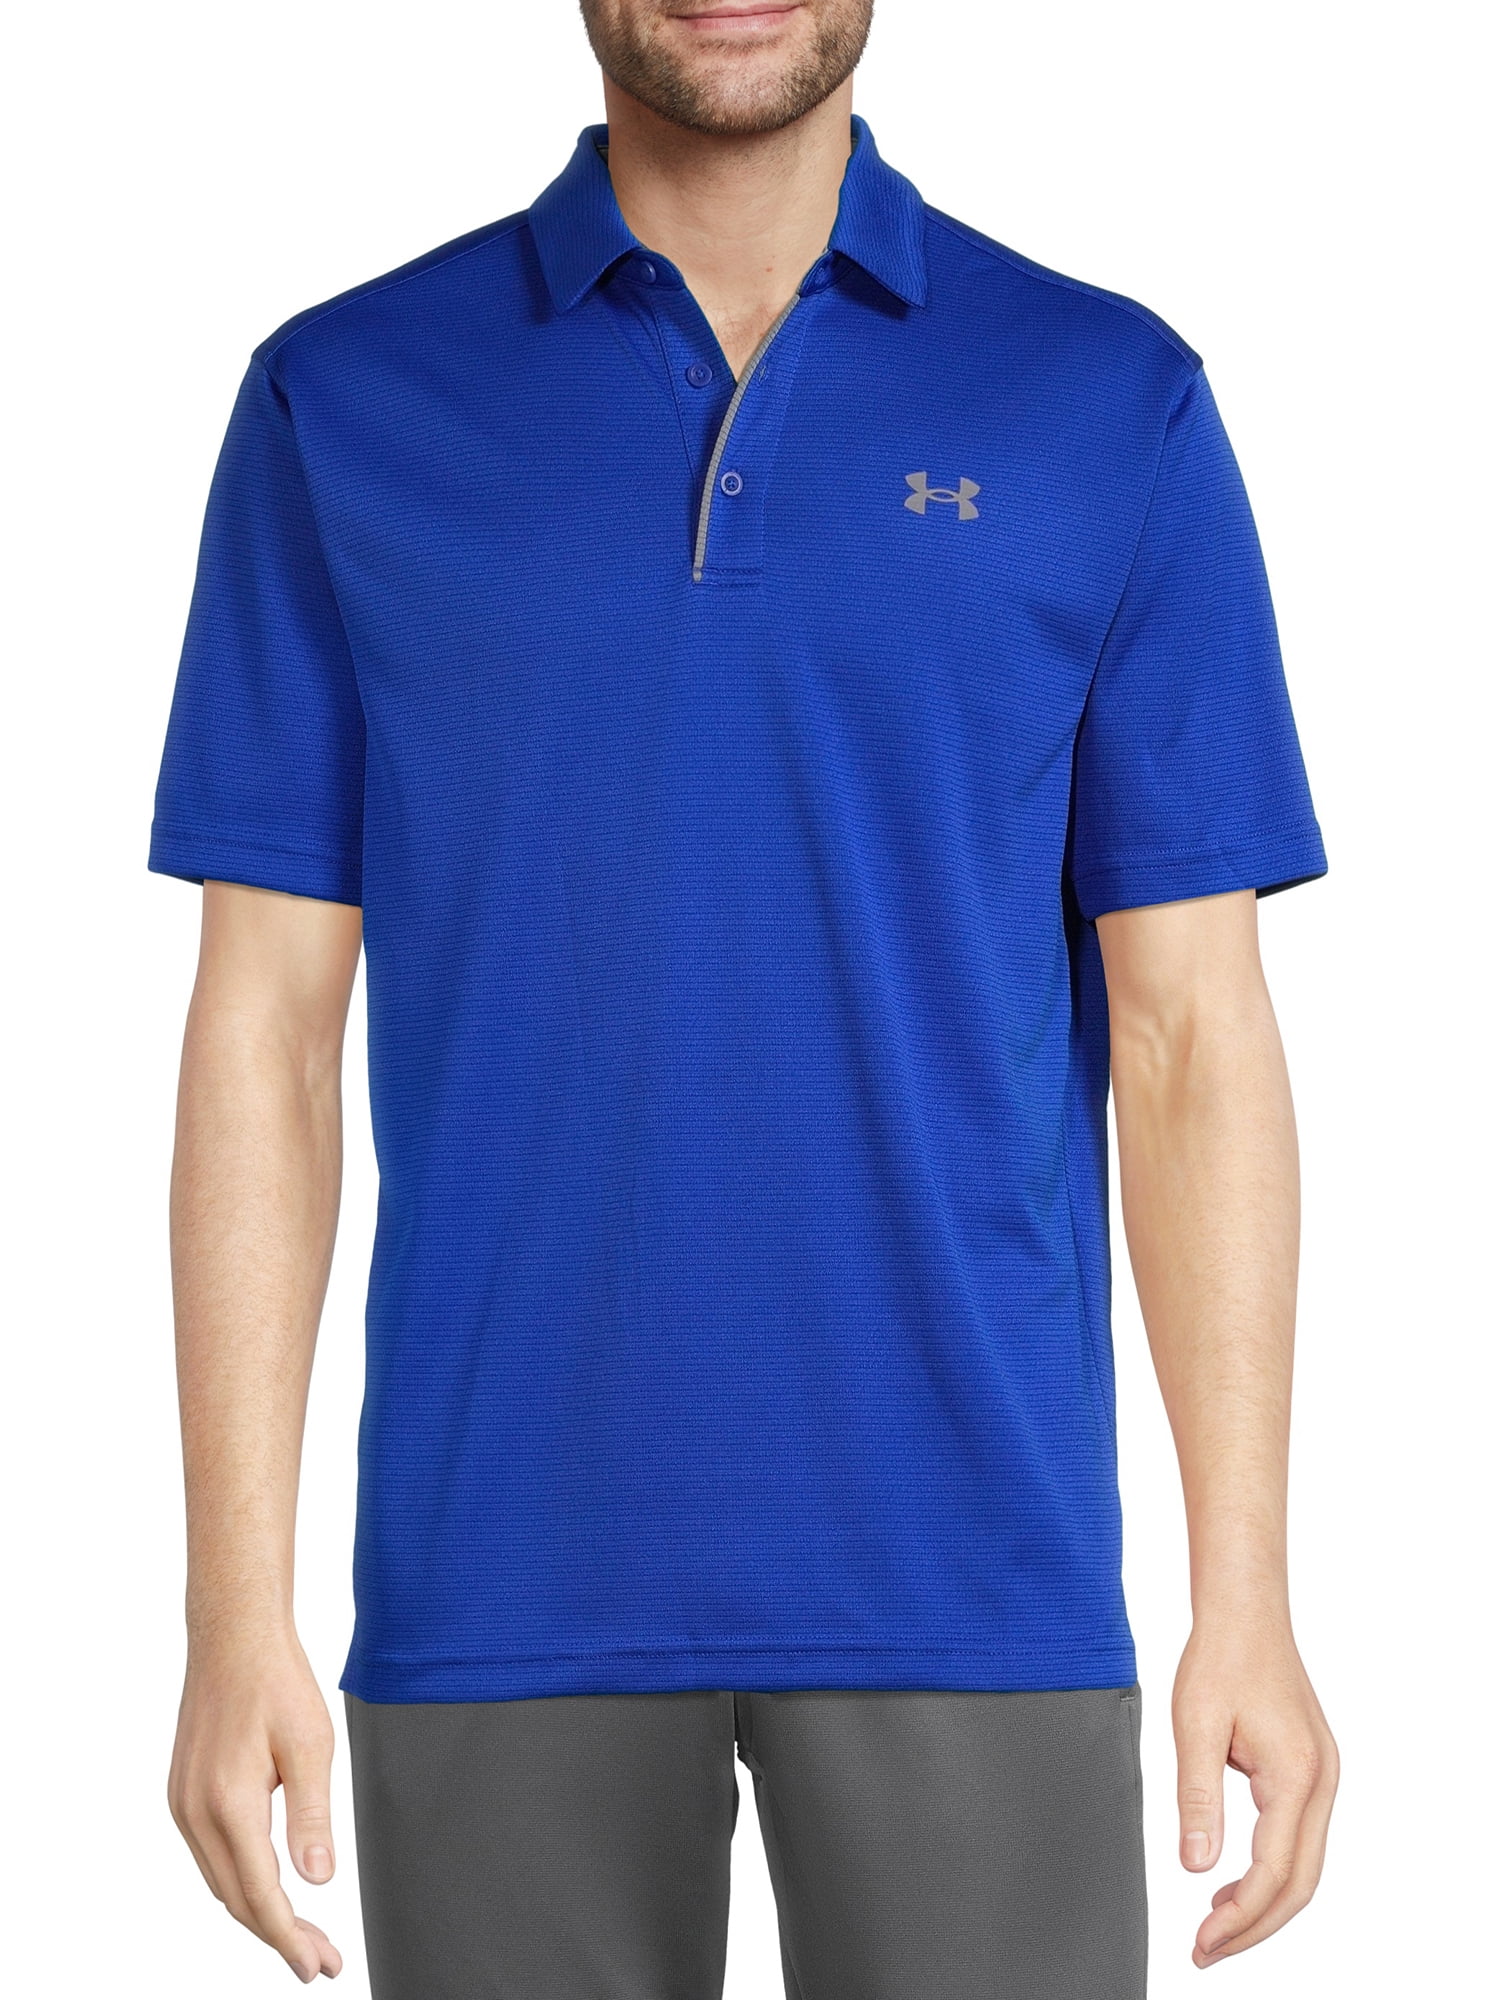 Under Men's and Men's UA Tech Polo Shirt, Sizes to 2XL - Walmart.com